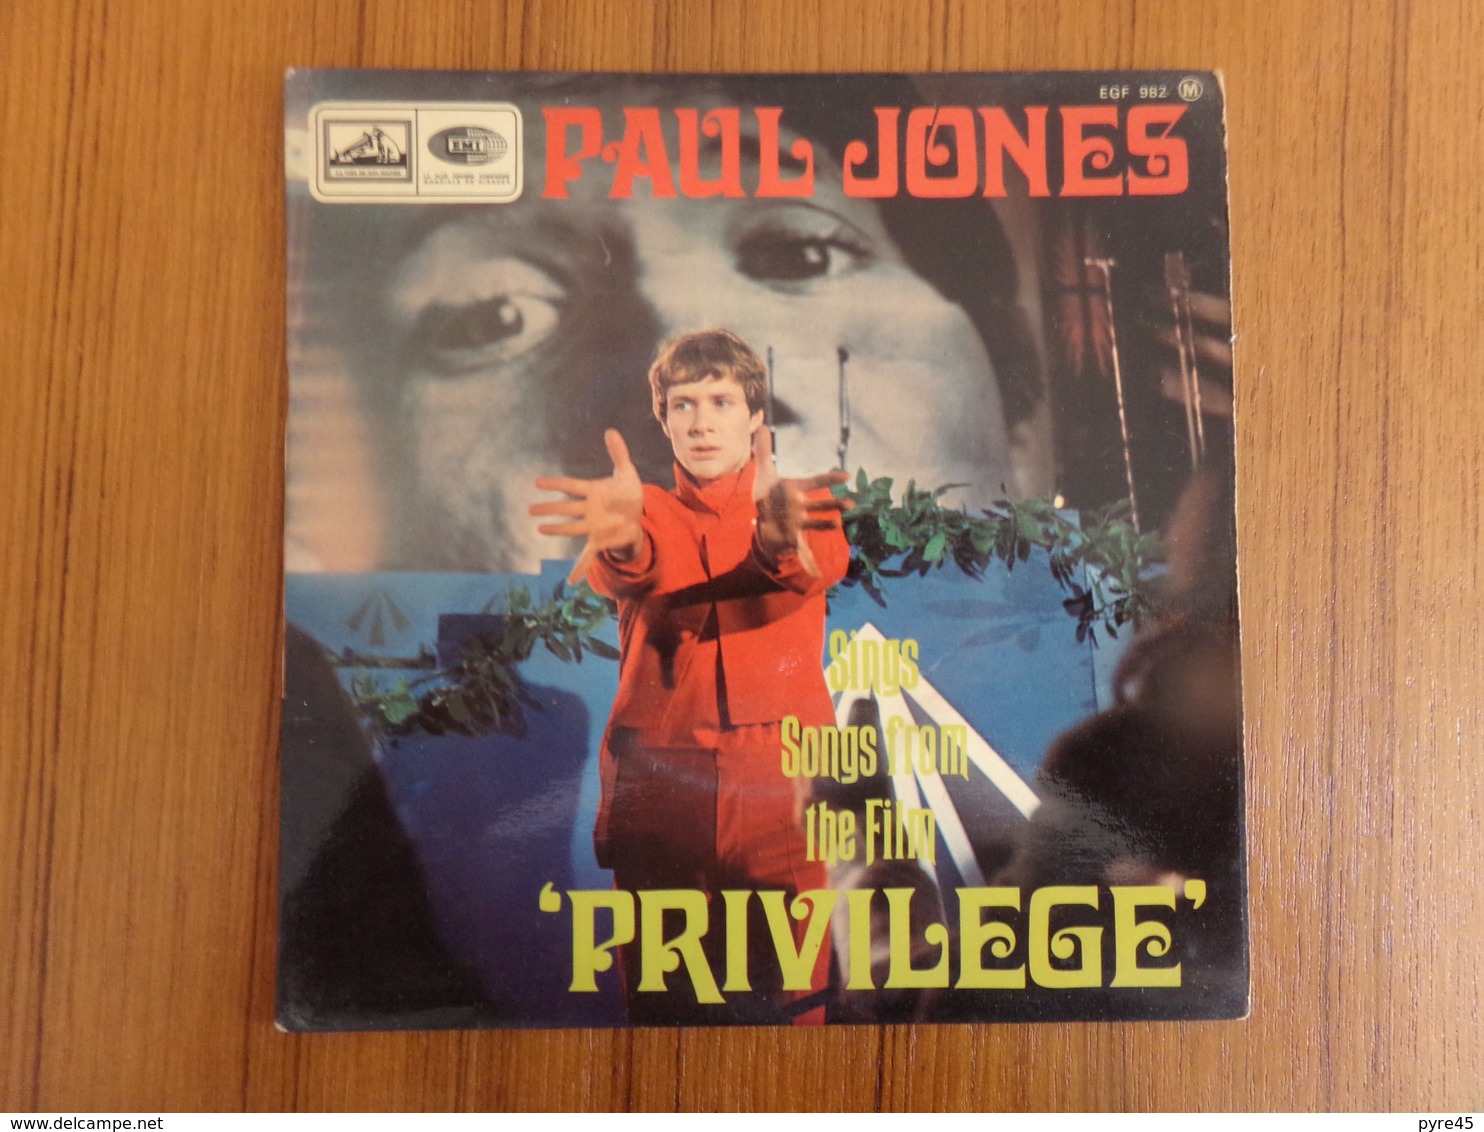 45 TOURS PAUL JONES PATHE EGF 982 PRIVILEGE / BREAKING / FREE ME / I VE BEEN A BAD BAD BOY DU FILM PRIVILEGE - Filmmusik